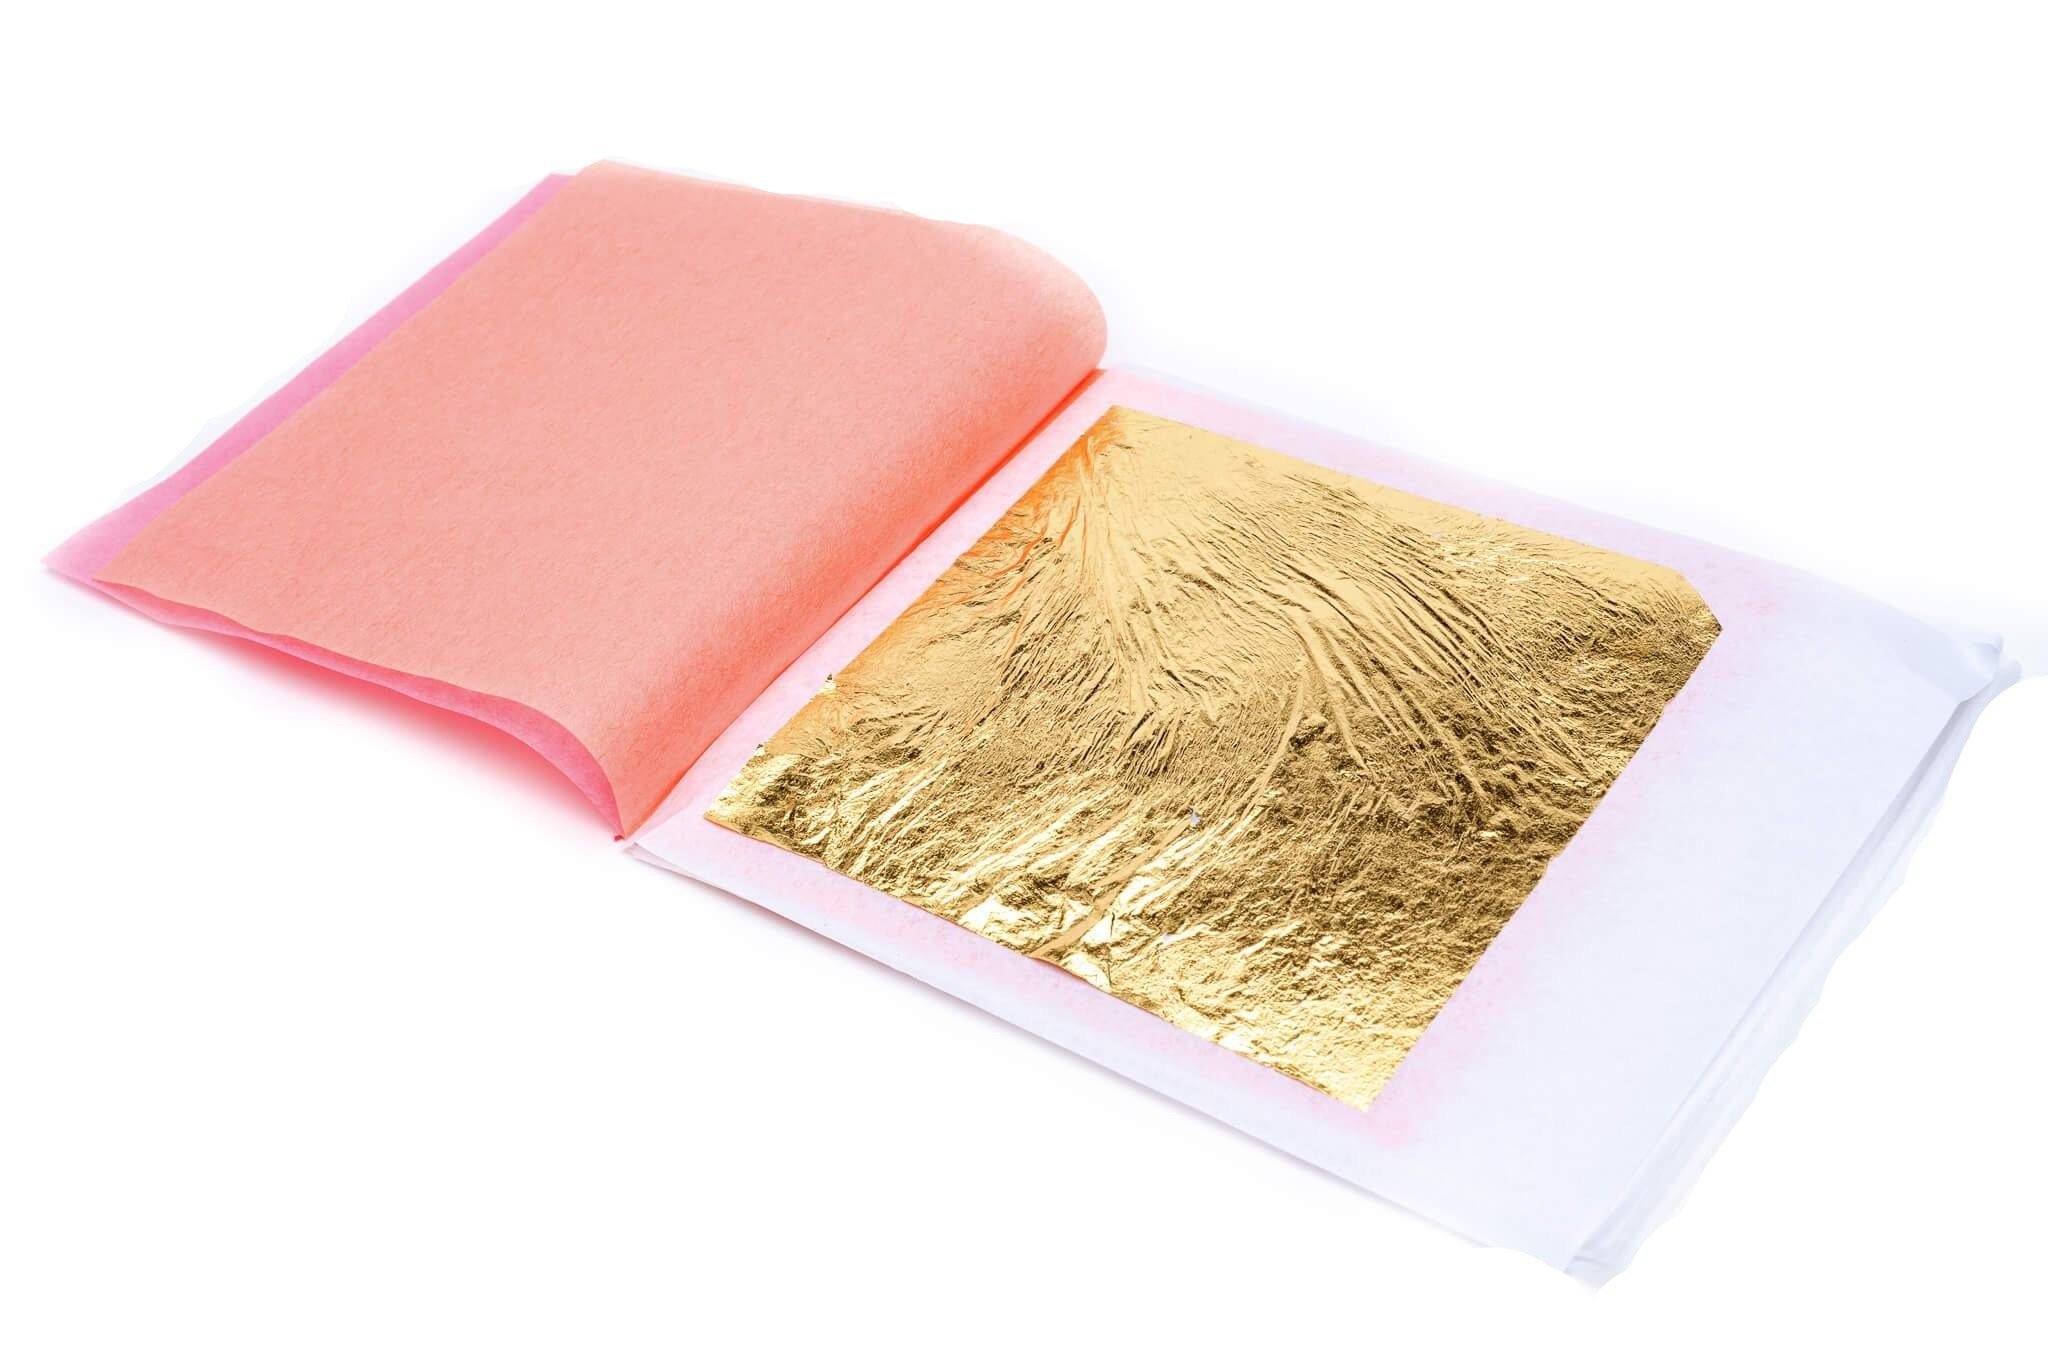 25mg 24K Edible Gold Leaf Foil Flakes